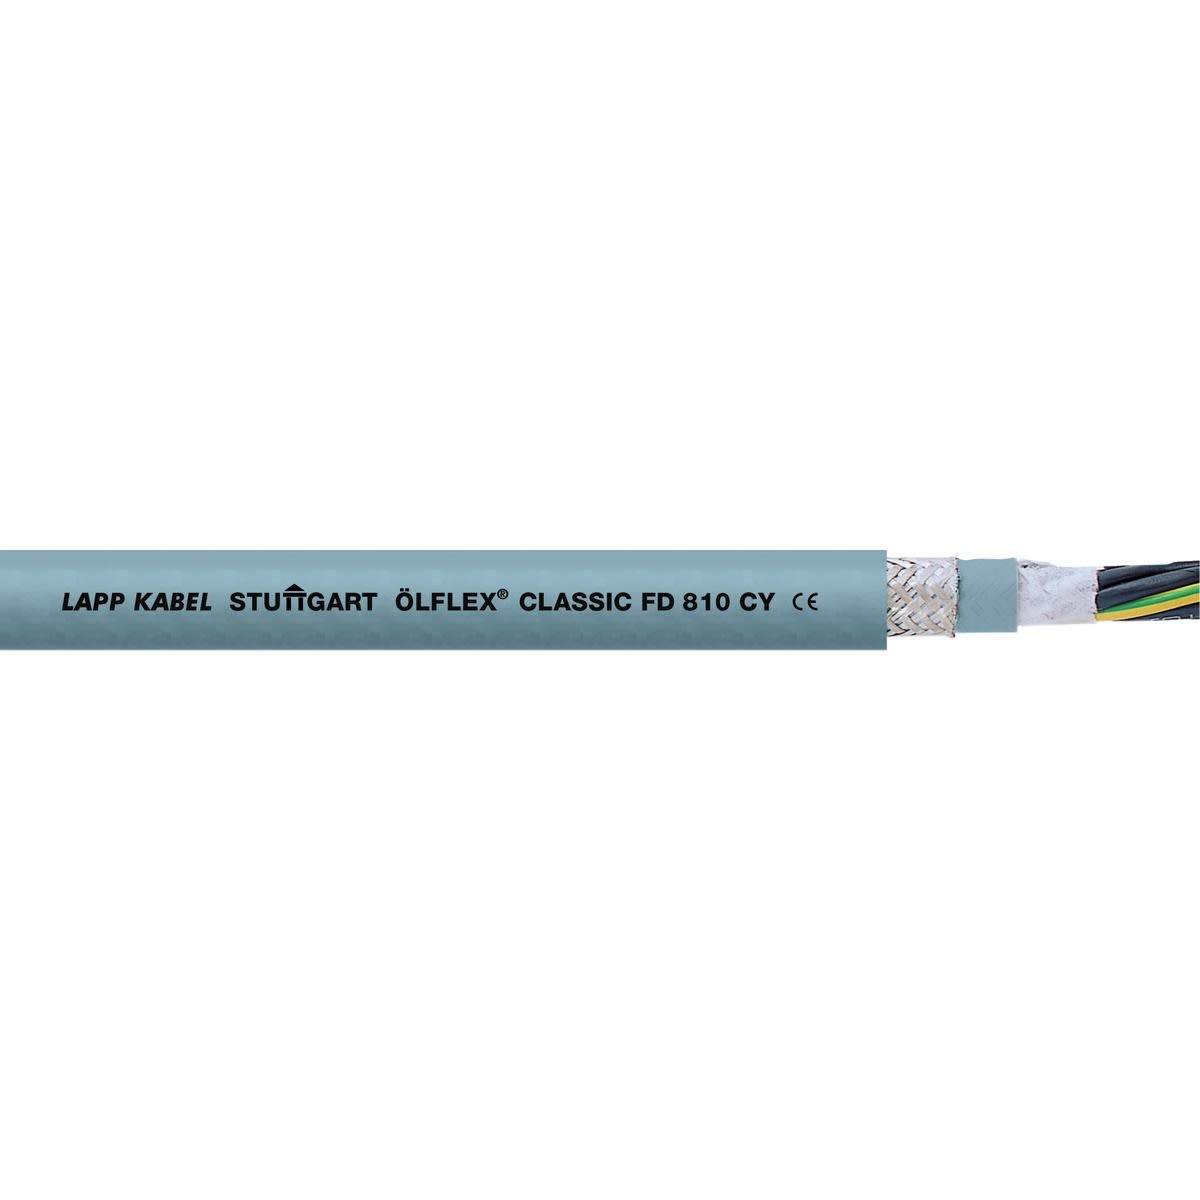 Lapp - oLFLEX CLASSIC FD 810 CY 12G1